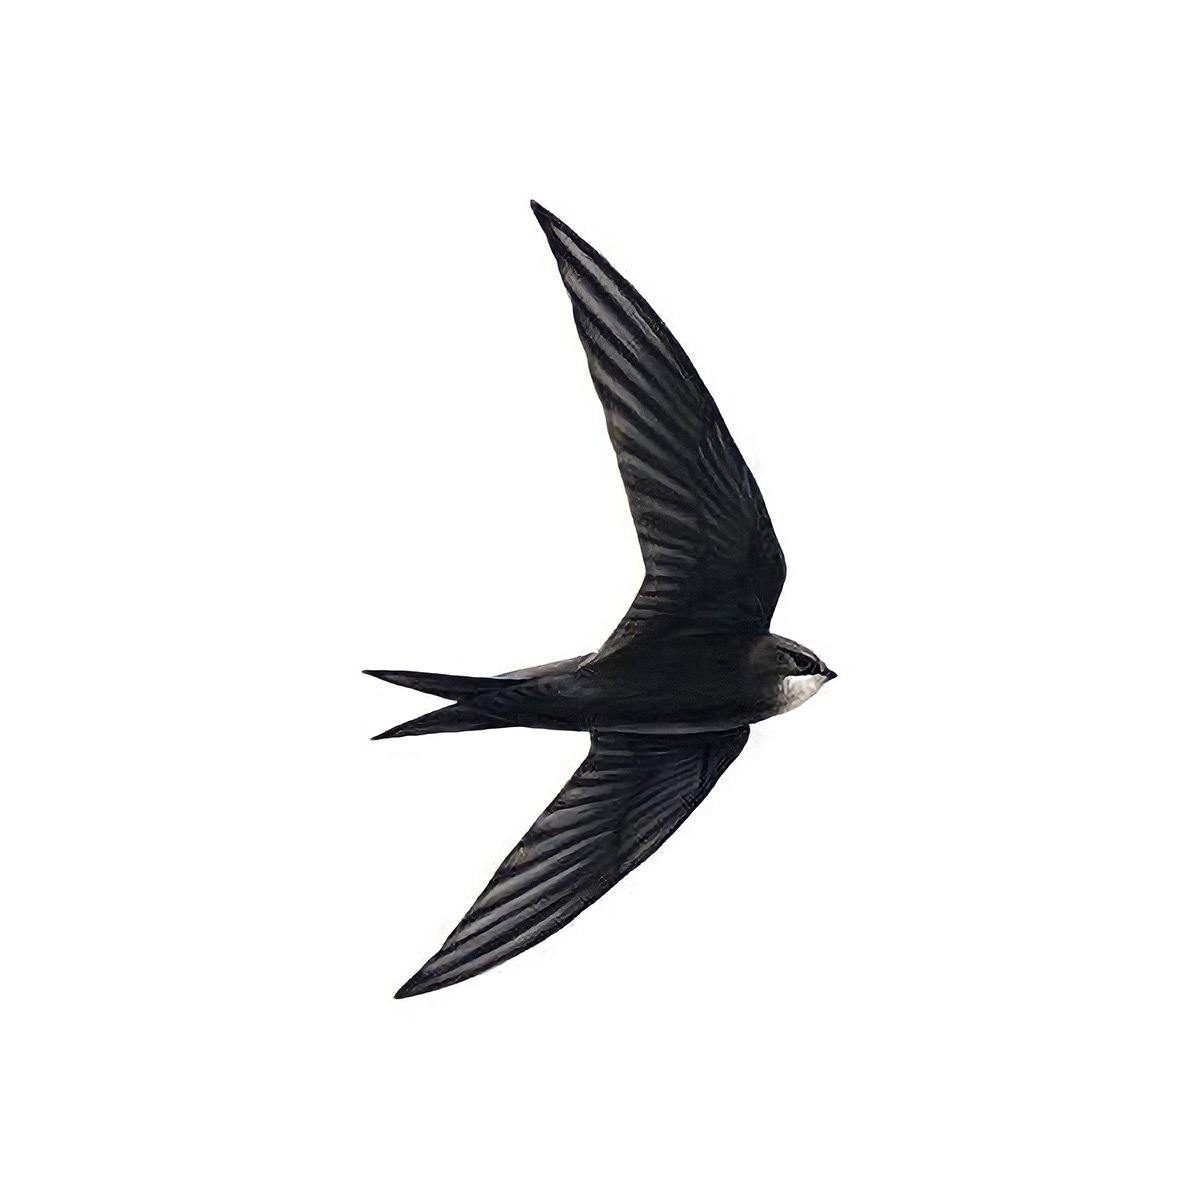 An illustration of a swift. Image Credit: RSPB